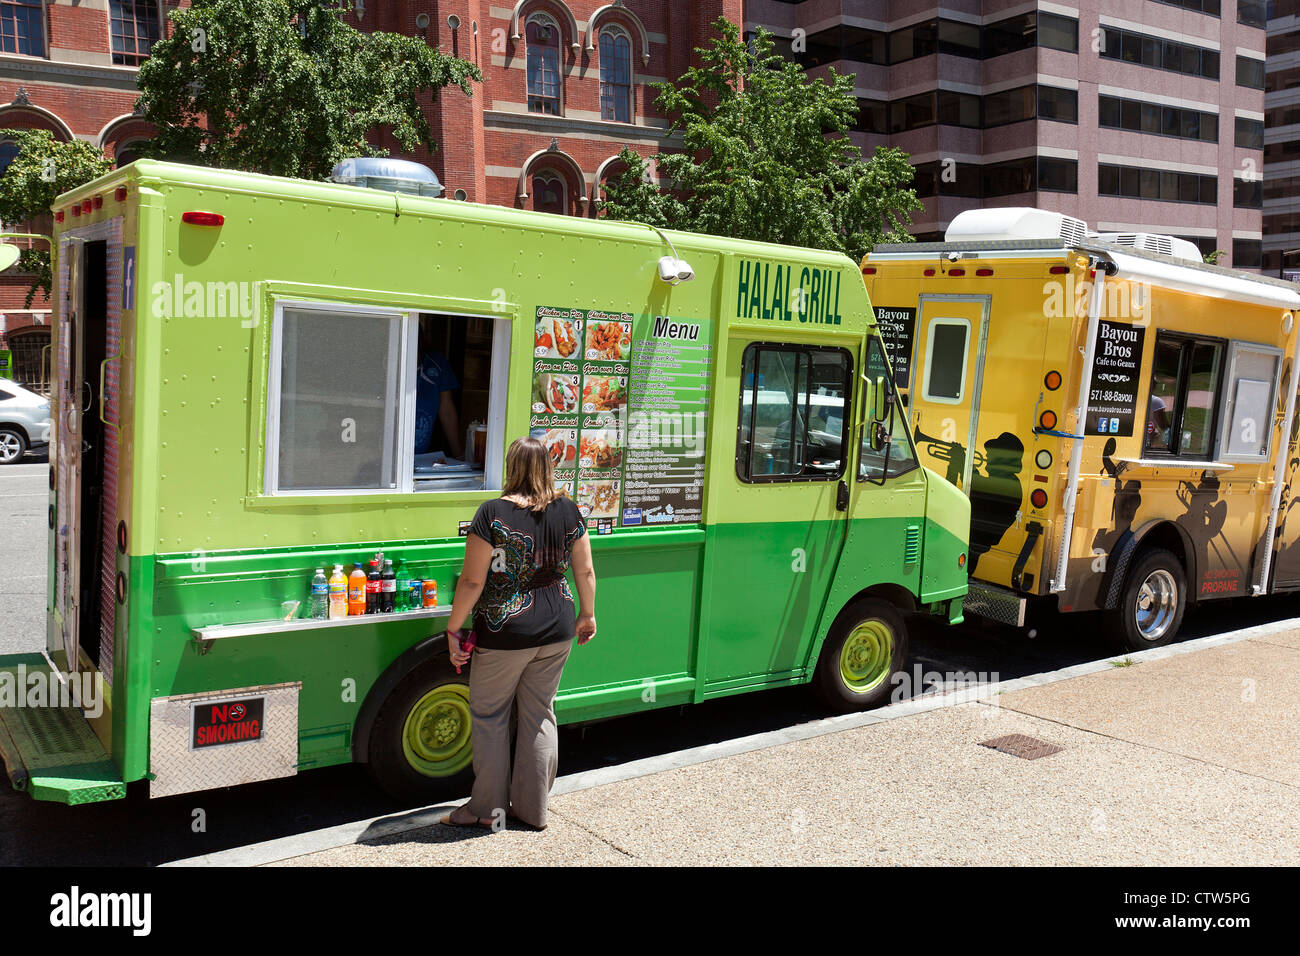 Food trucks line up on an urban street  - Washington, DC USA Stock Photo